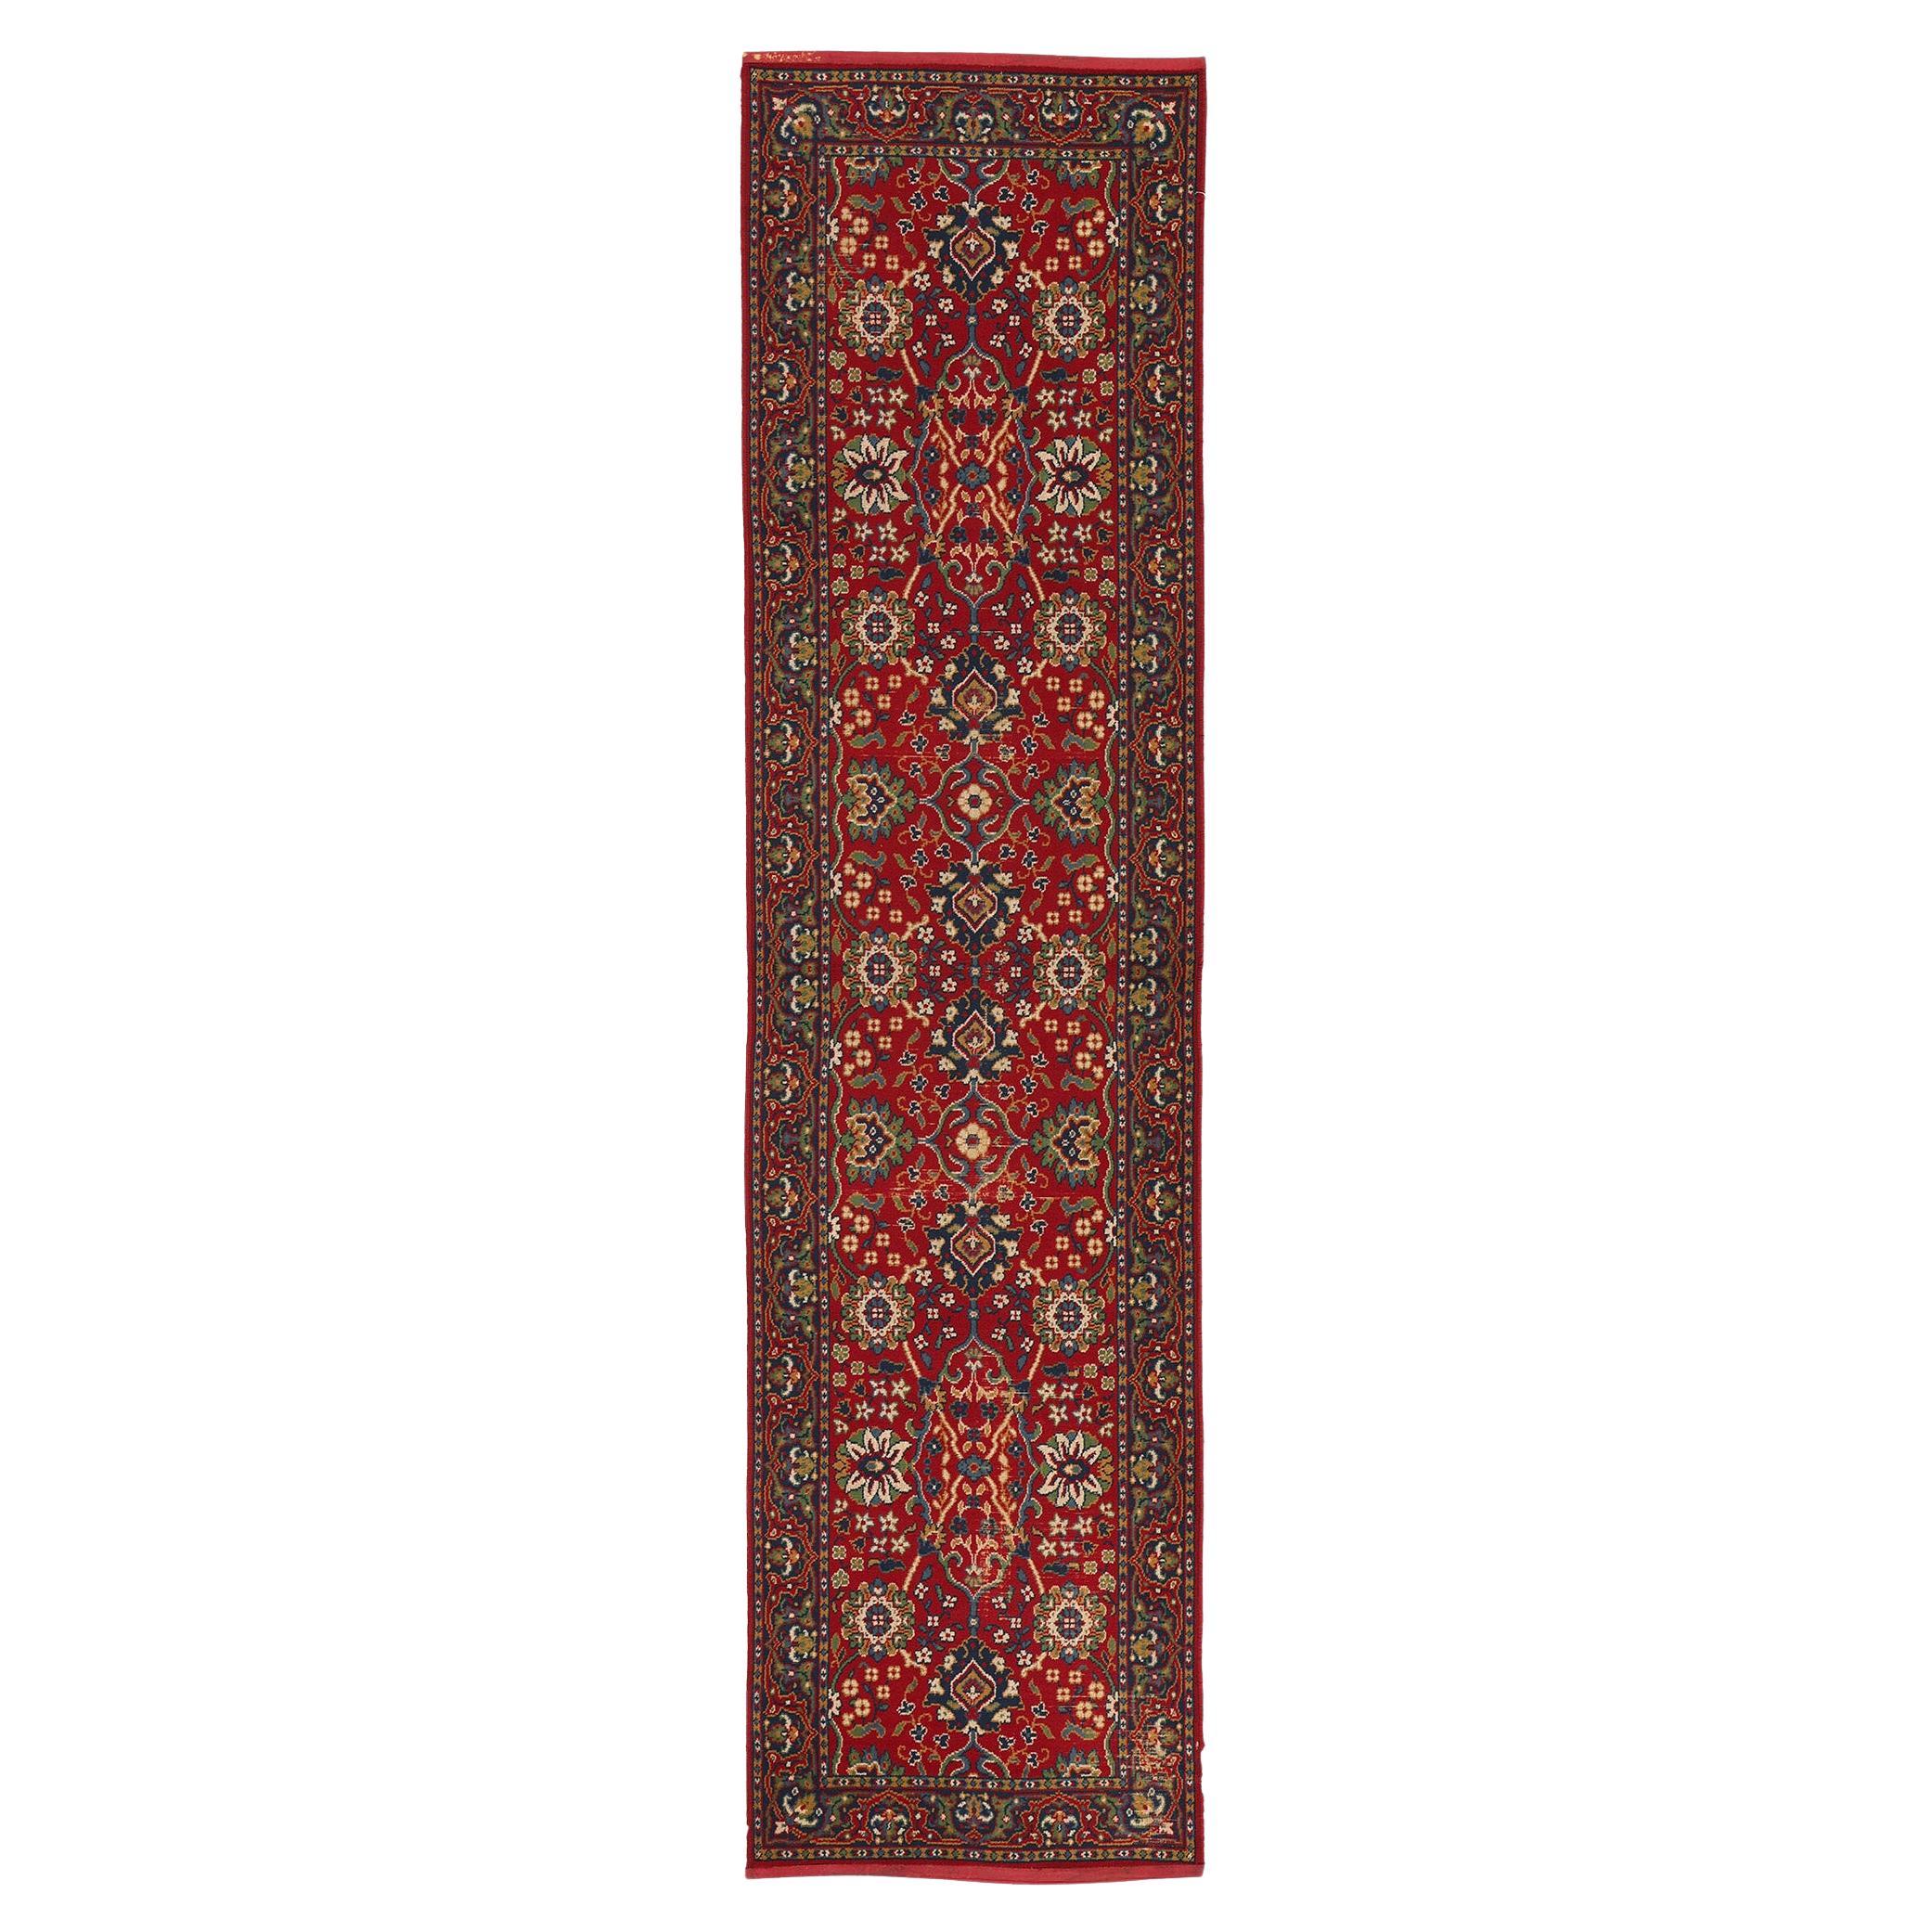 Antiker europäischer persischer geblümter Teppich im Angebot